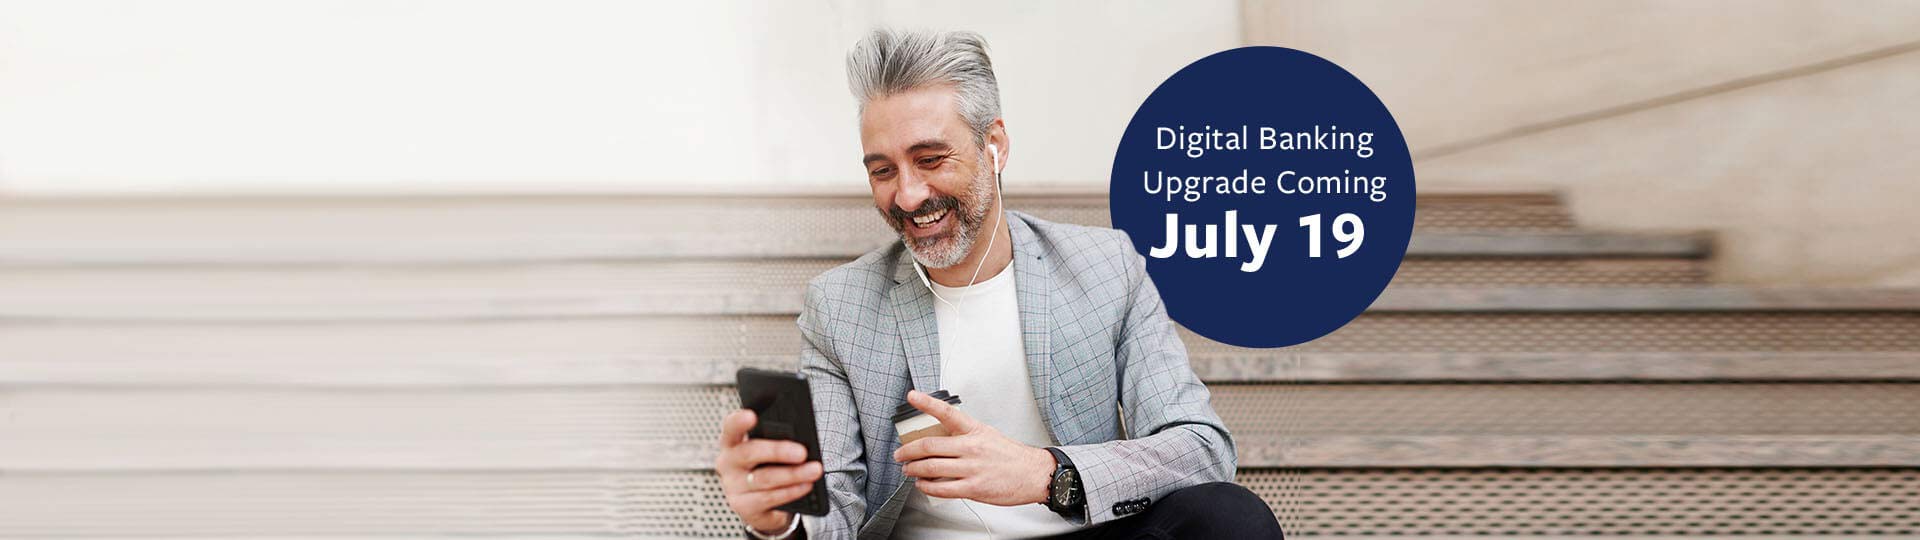 digital banking upgrade coming July 19, 2022